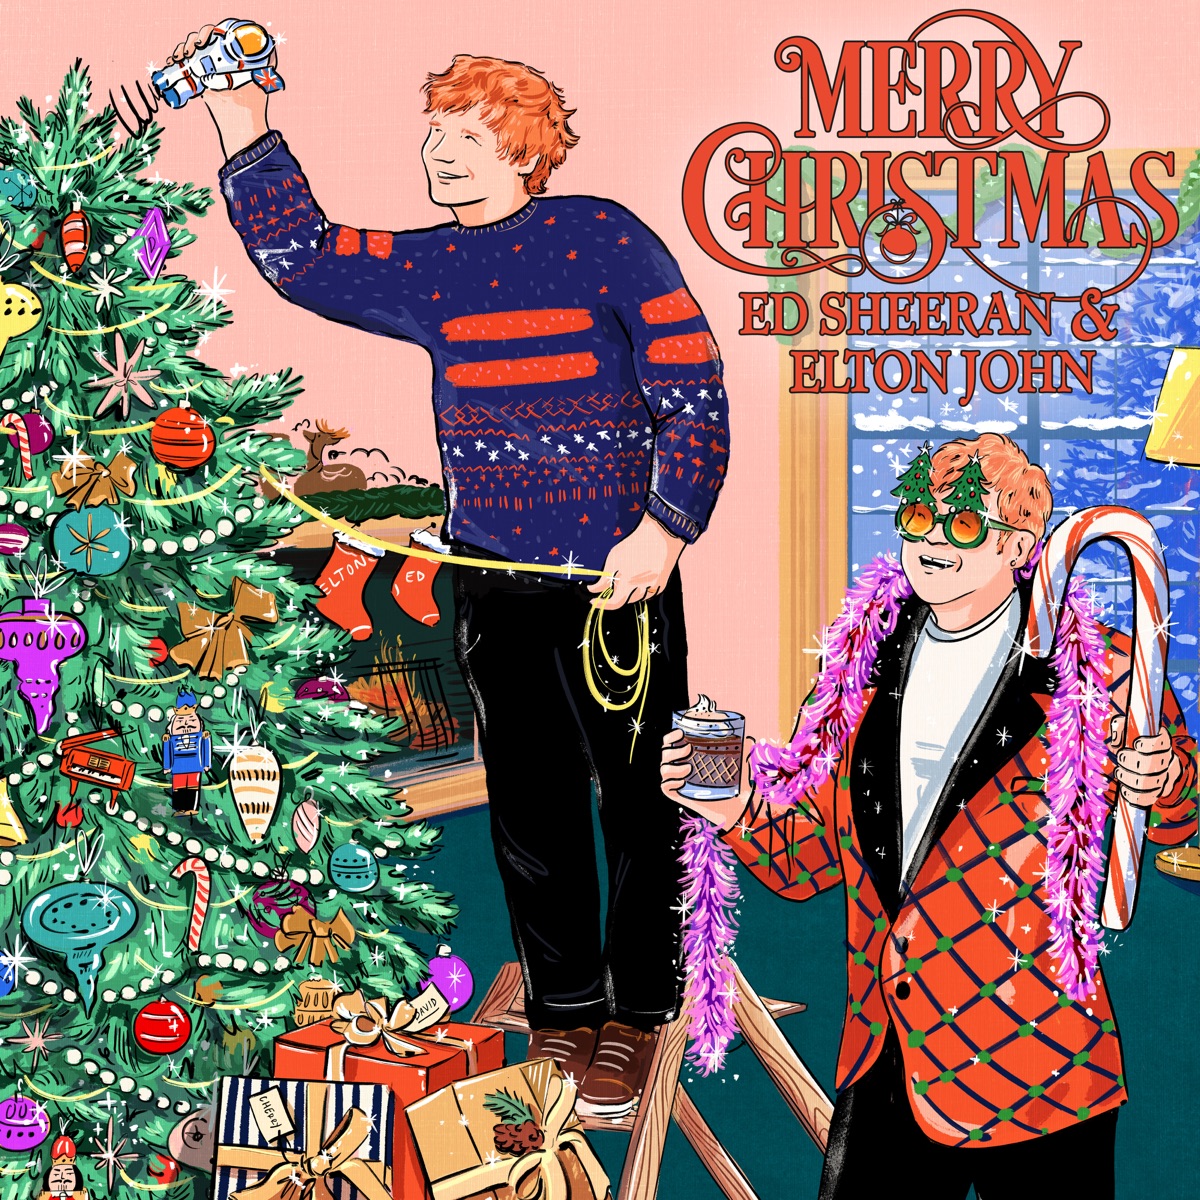 Cover art for『Ed Sheeran & Elton John - Merry Christmas』from the release『Merry Christmas